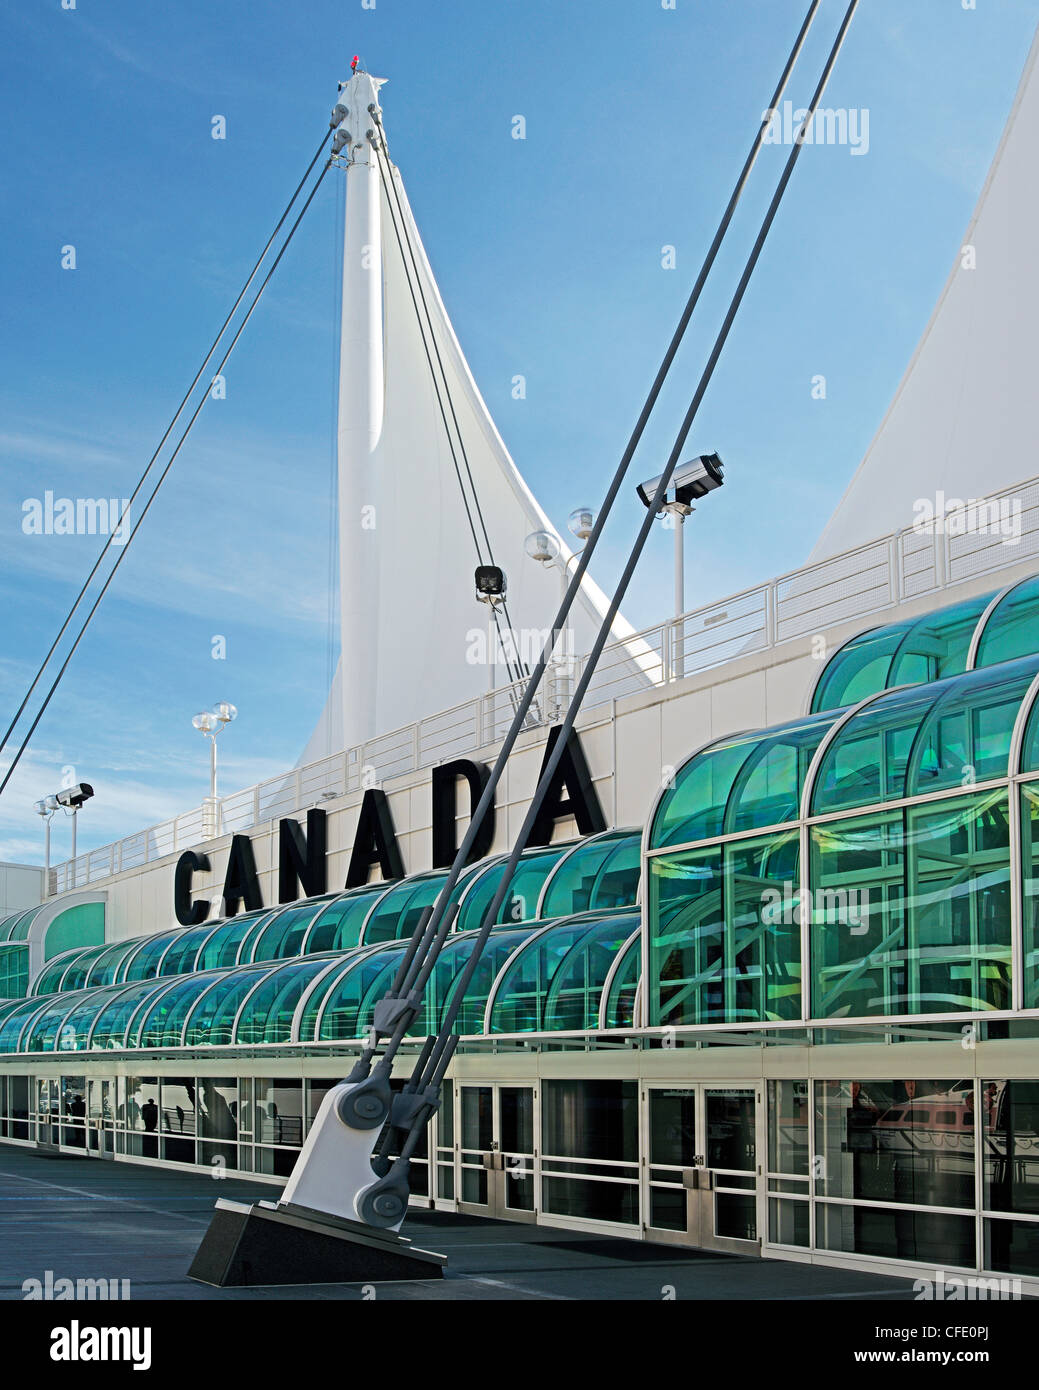 Canada Place, Vancouver, British Columbia, Canada Stock Photo